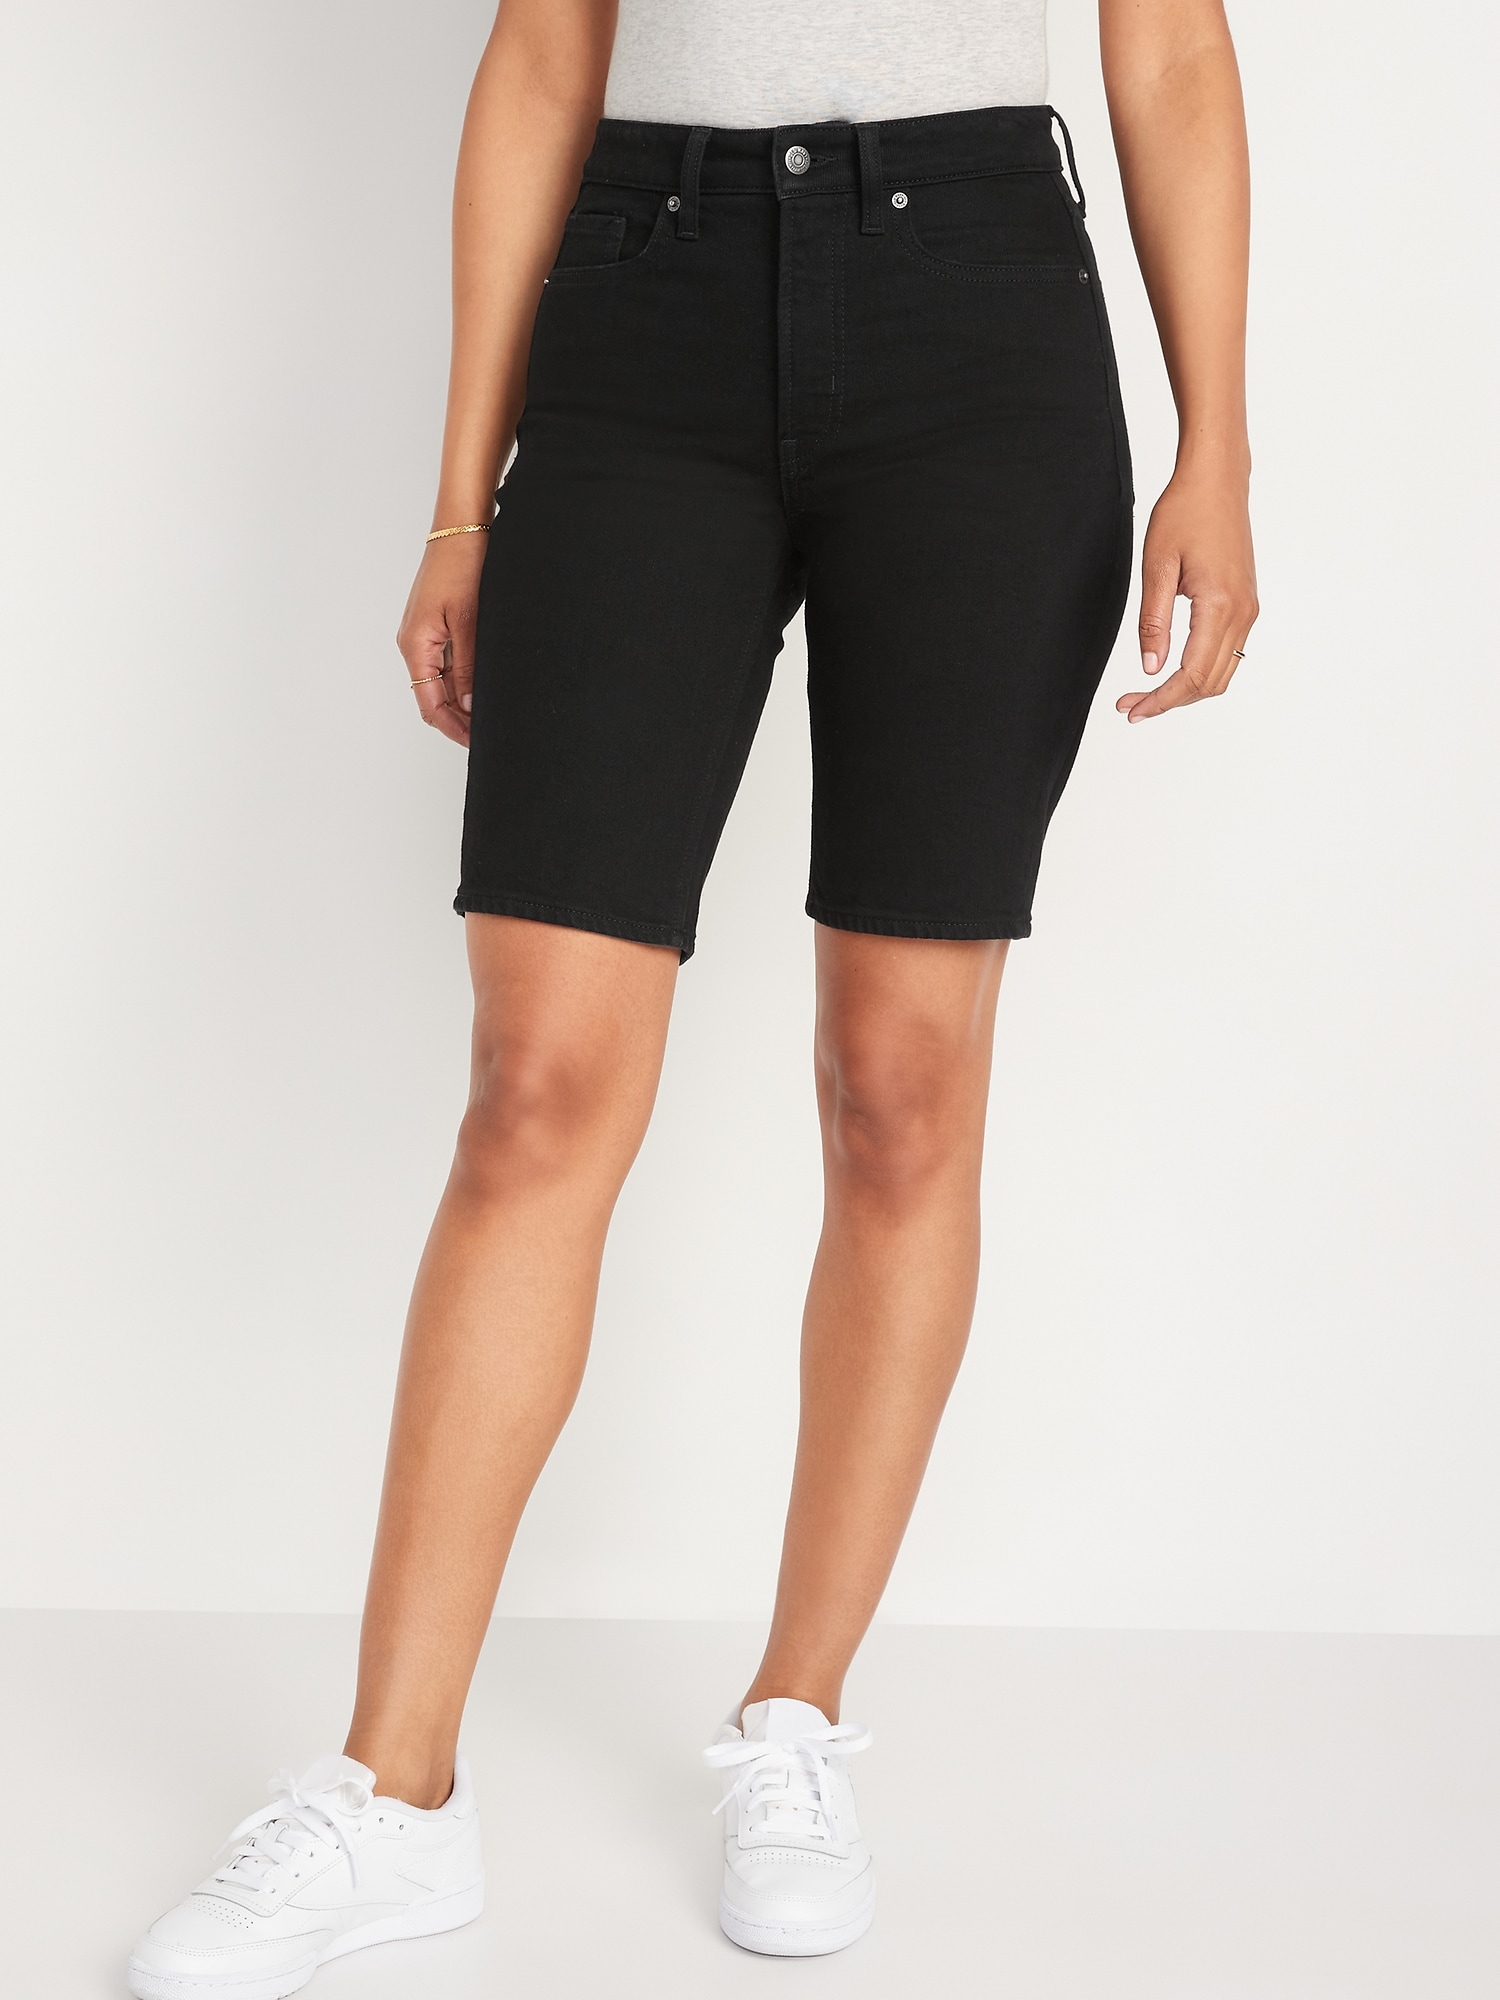 High-Waisted OG Straight Jean Bermuda Shorts for Women -- 9-inch inseam